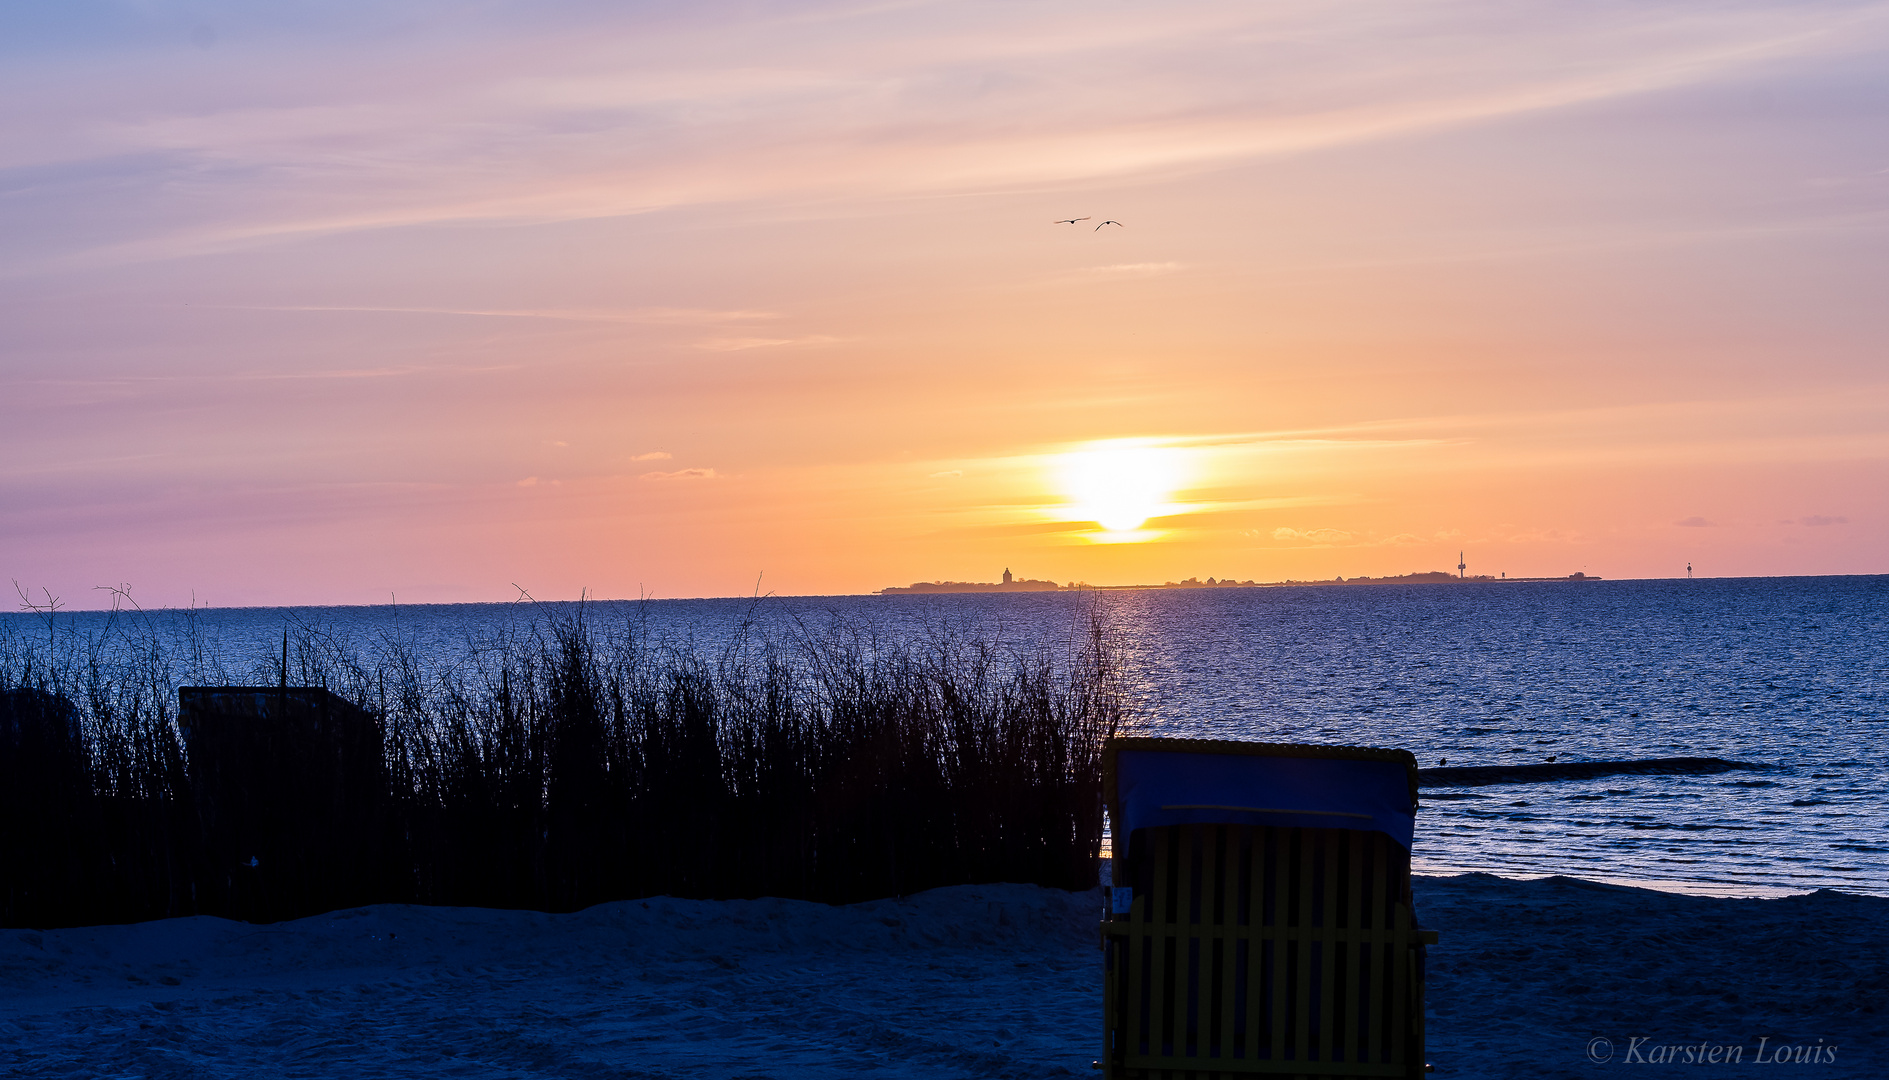 Sonnenuntergang Cuxhaven